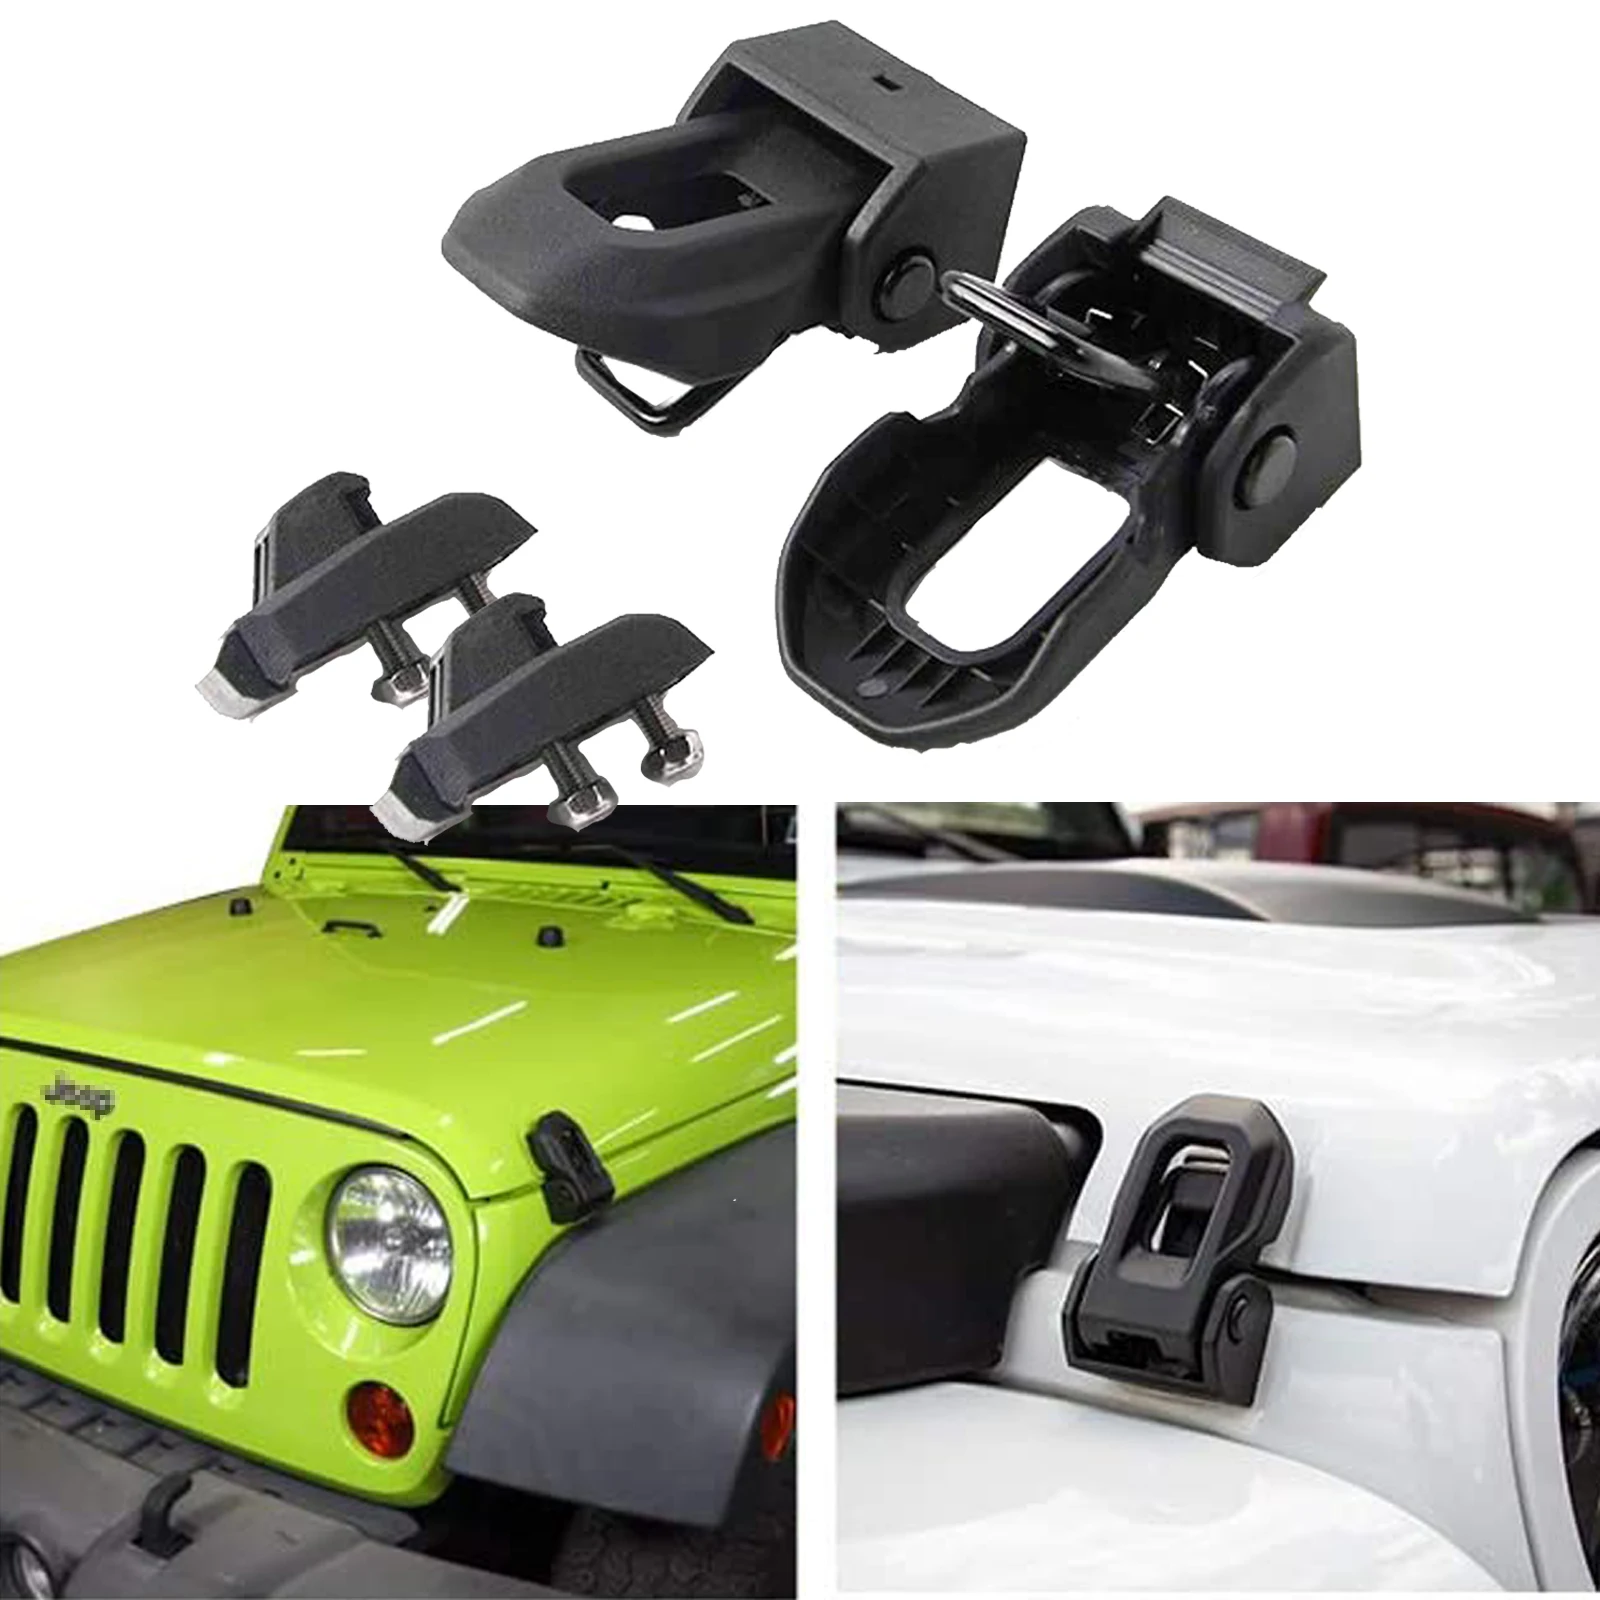 eep Hood Latch For 2007-2018 Jeep Wrangler Jk JL Black Stainless Steel Catch Kit Accessories